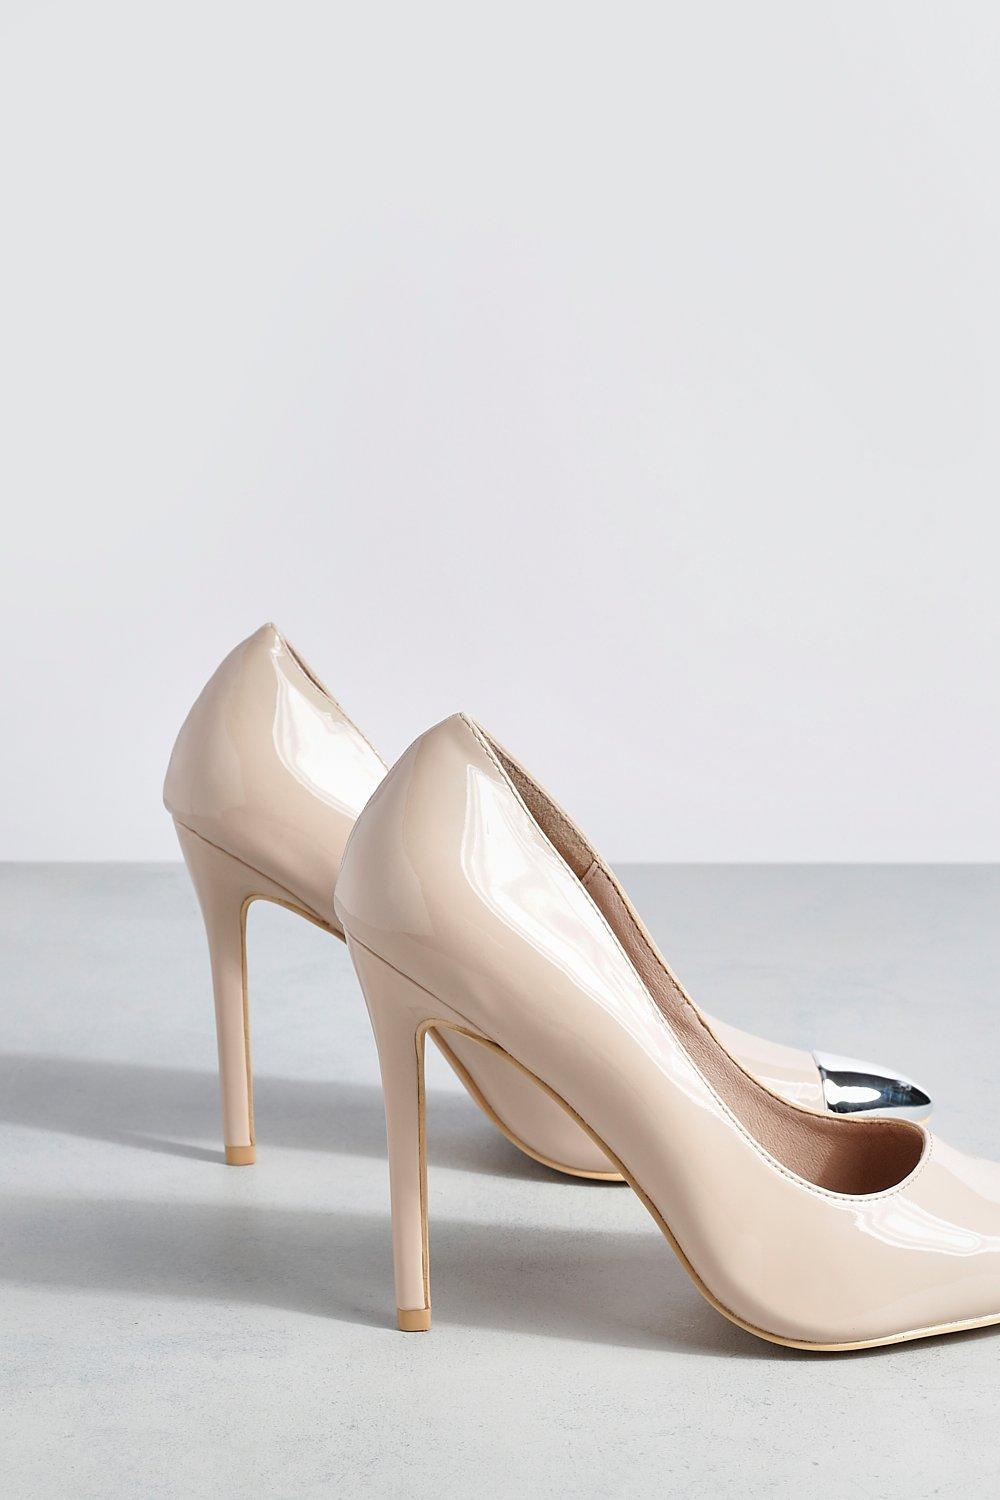 Louis Vuitton, Shoes, Louis Vuitton Insider Embellished Pump Heels Nude